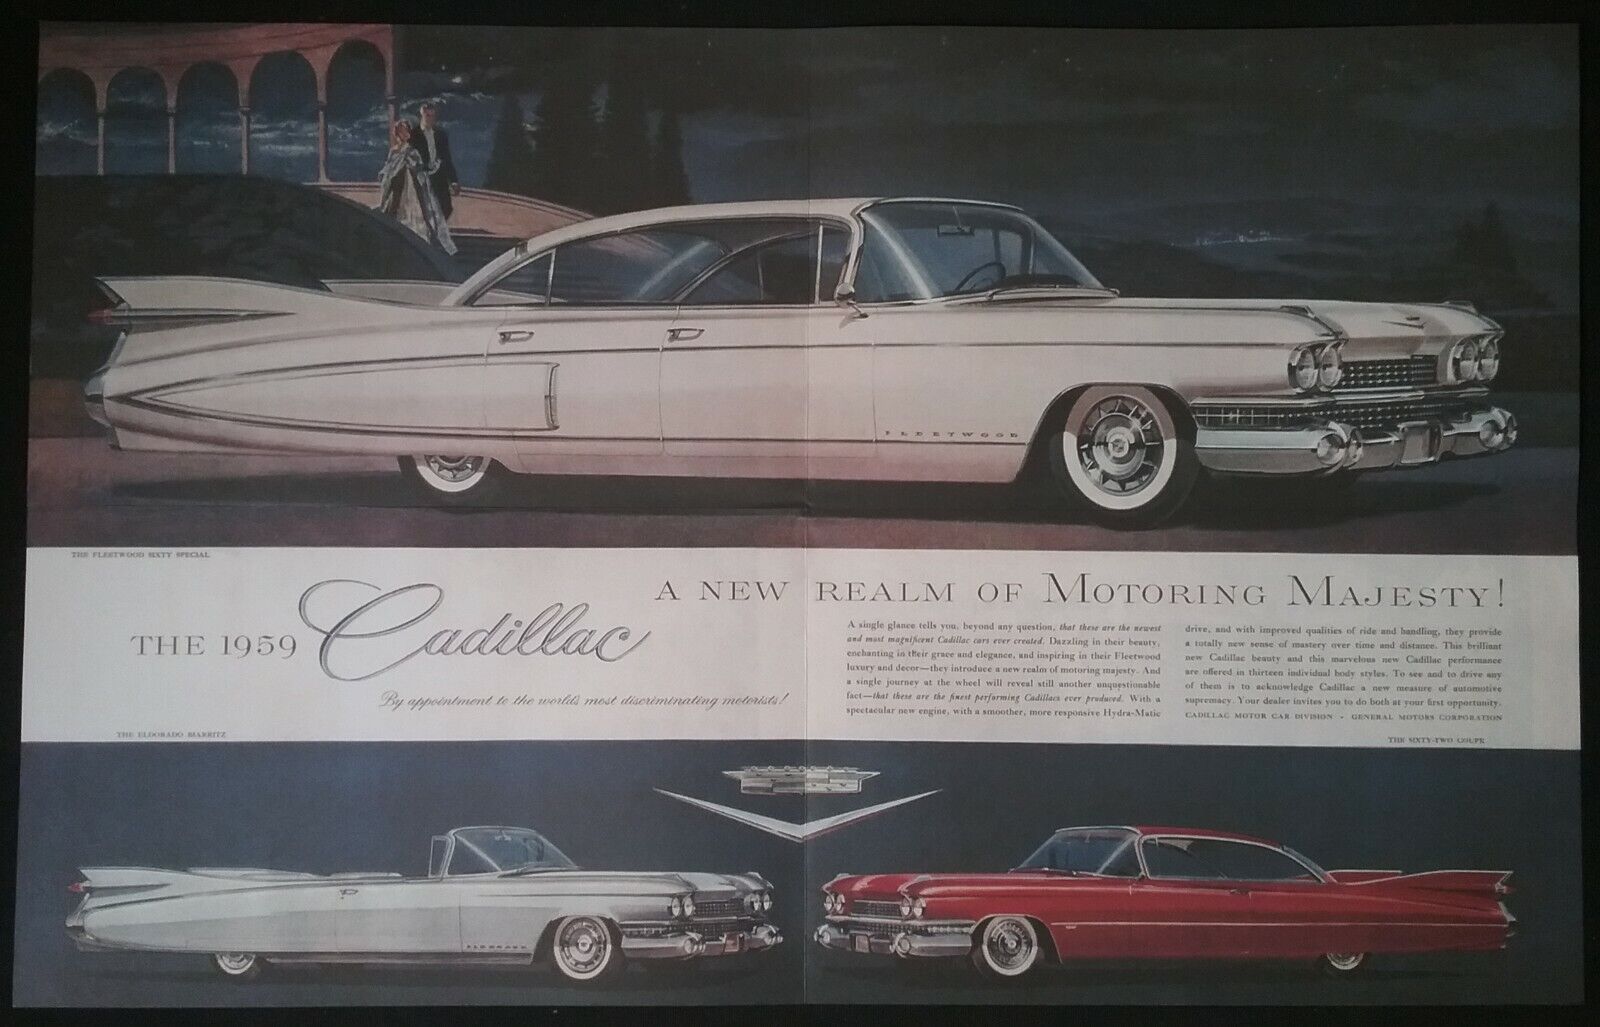  1959 CADILLAC ADVERTISING POSTER , AMERICAN CAR HISTORY (13)